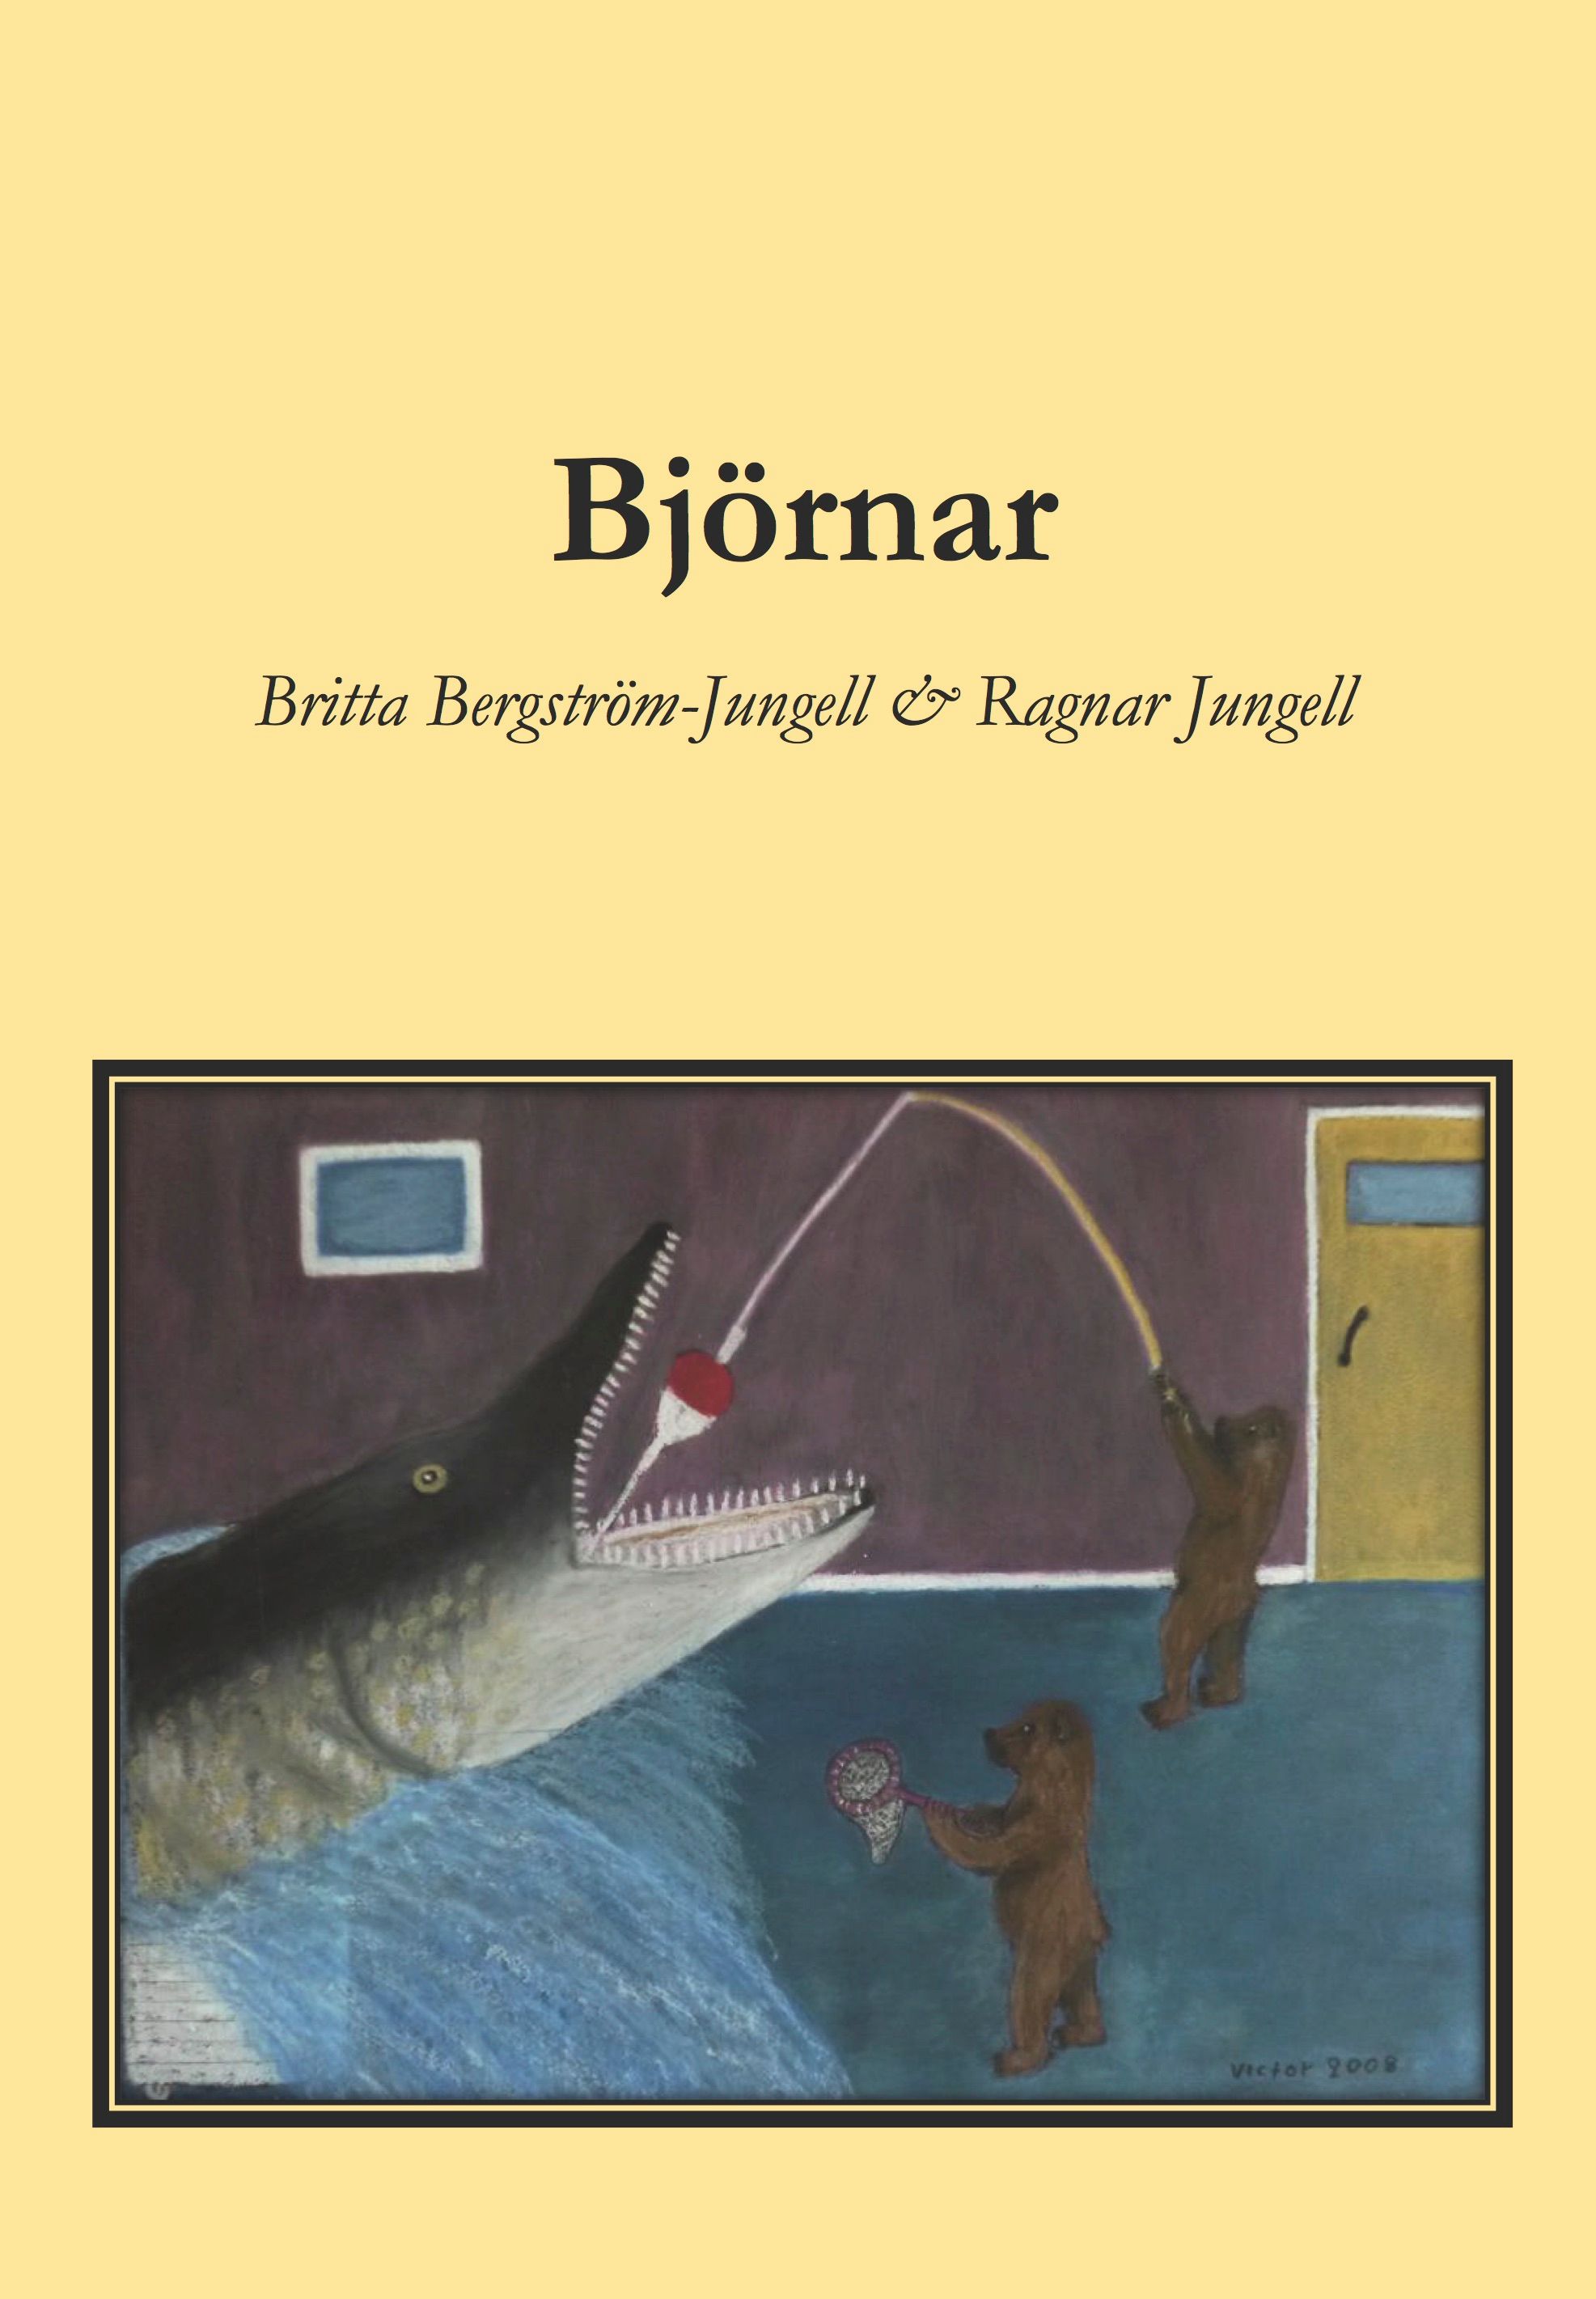 Björnar, e-bog af Britta Bergström-Jungell, Ragnar Jungell